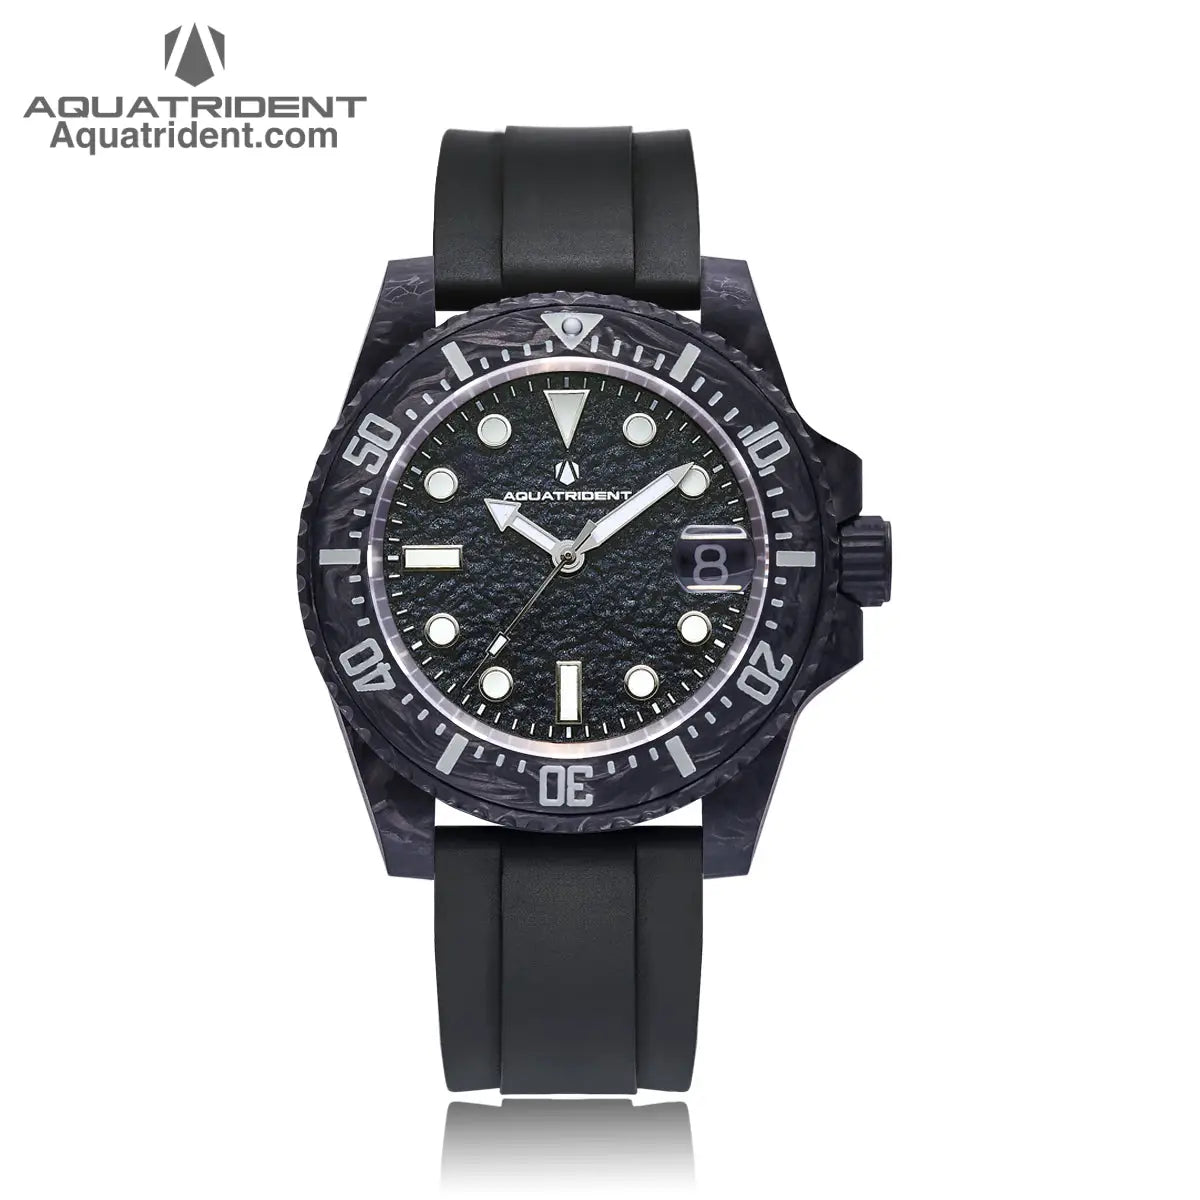 black carbon fiber case and bezel-Black rough textured dial with dates-balck fluororubber-watch